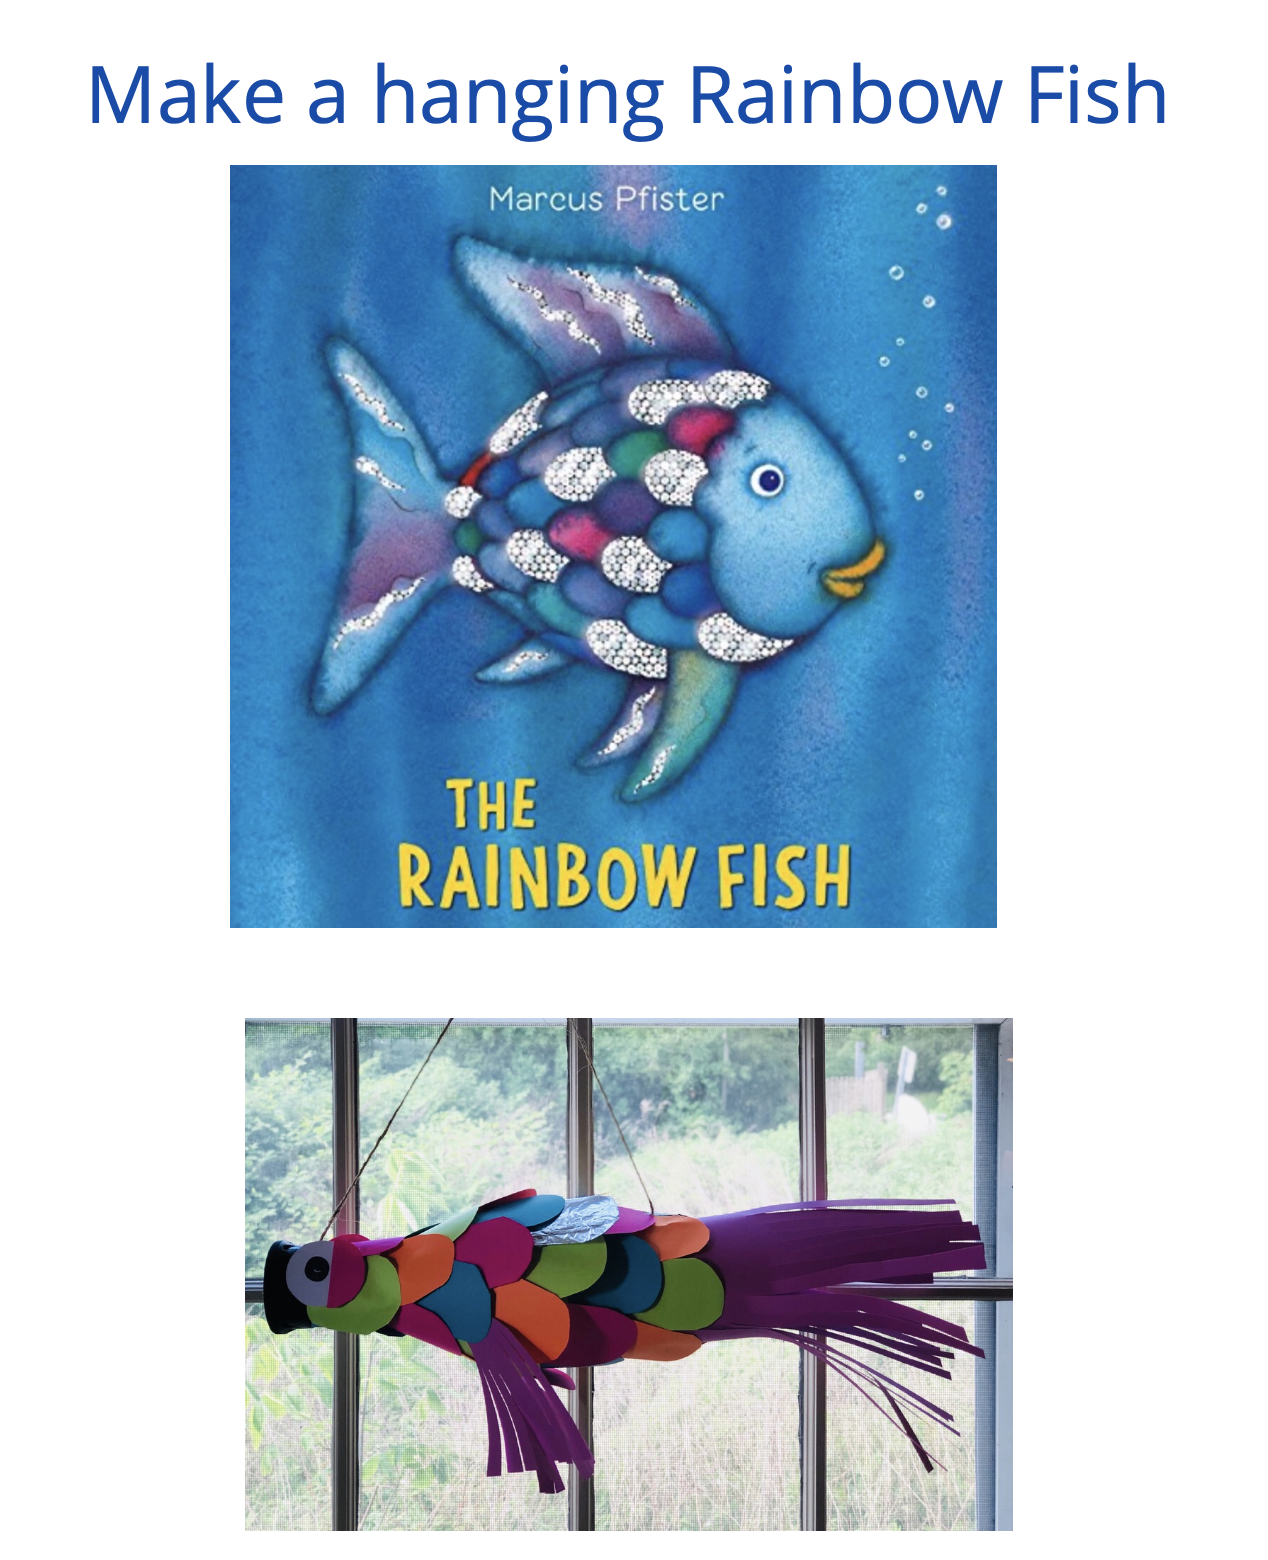 Hanging Rainbow Fish